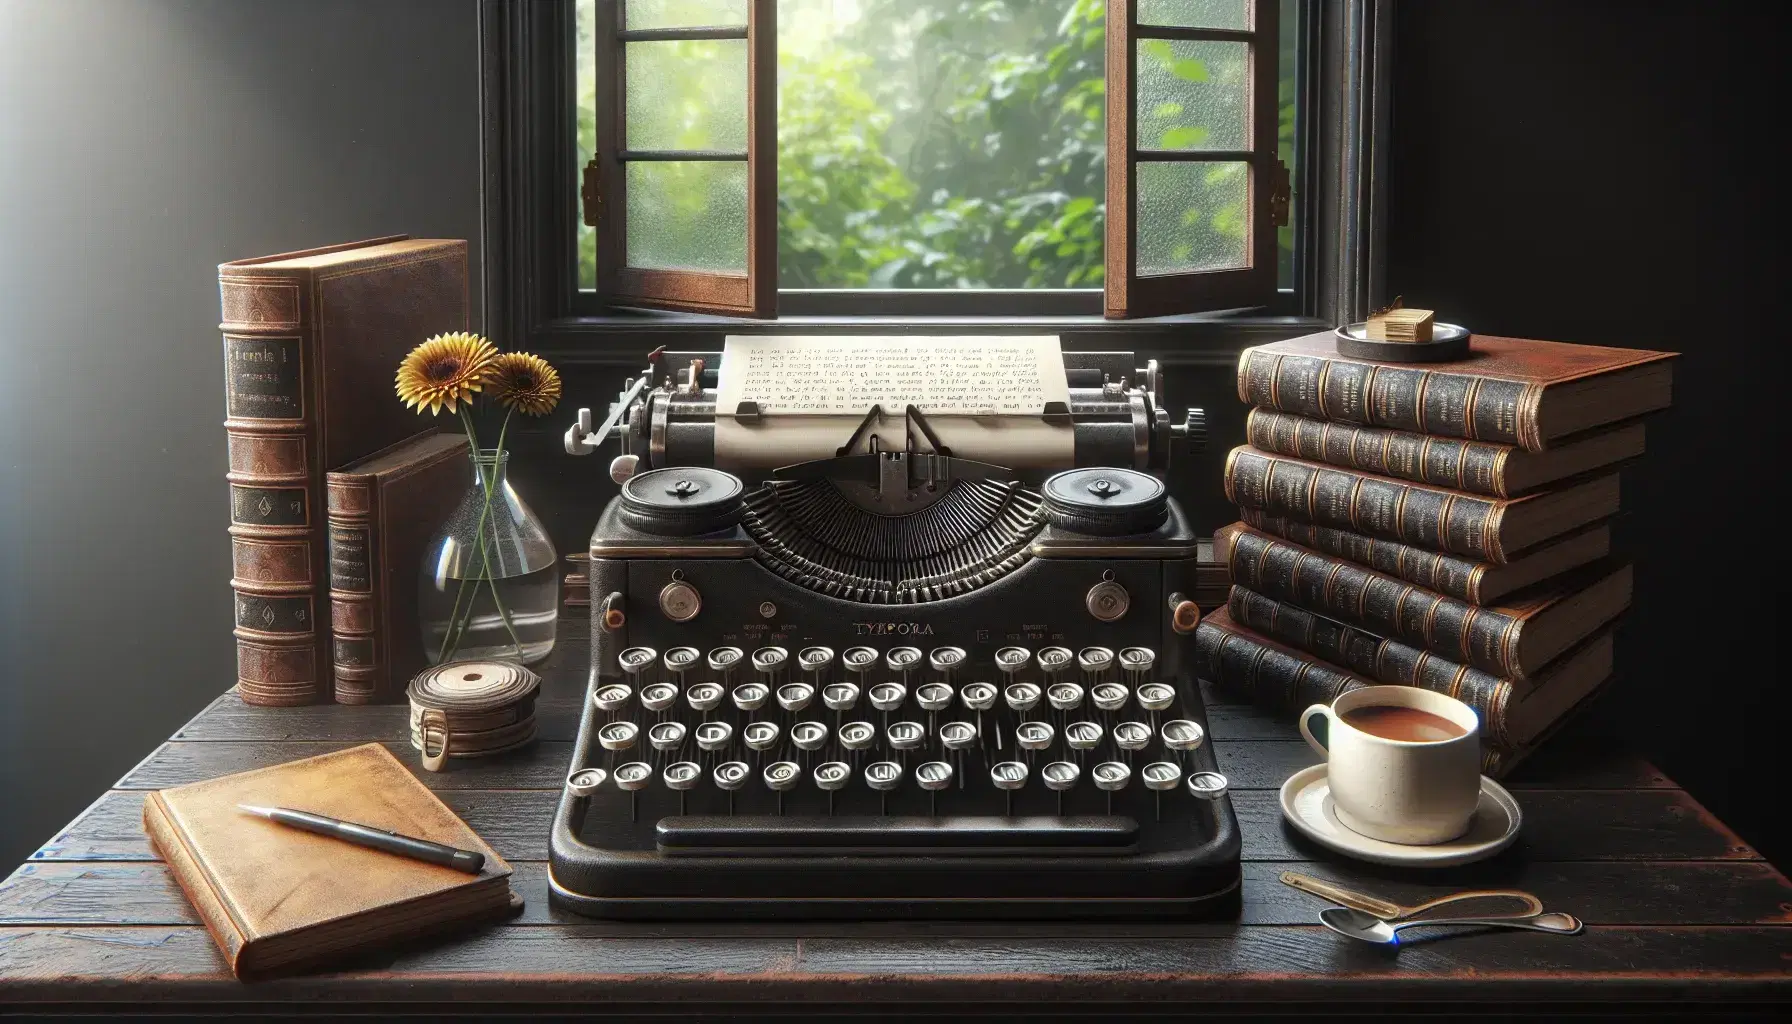 Máquina de escribir antigua con teclas redondas sobre mesa de madera oscura, libros encuadernados en cuero, ventana con vista a árboles y taza de café, junto a flor amarilla en jarrón.